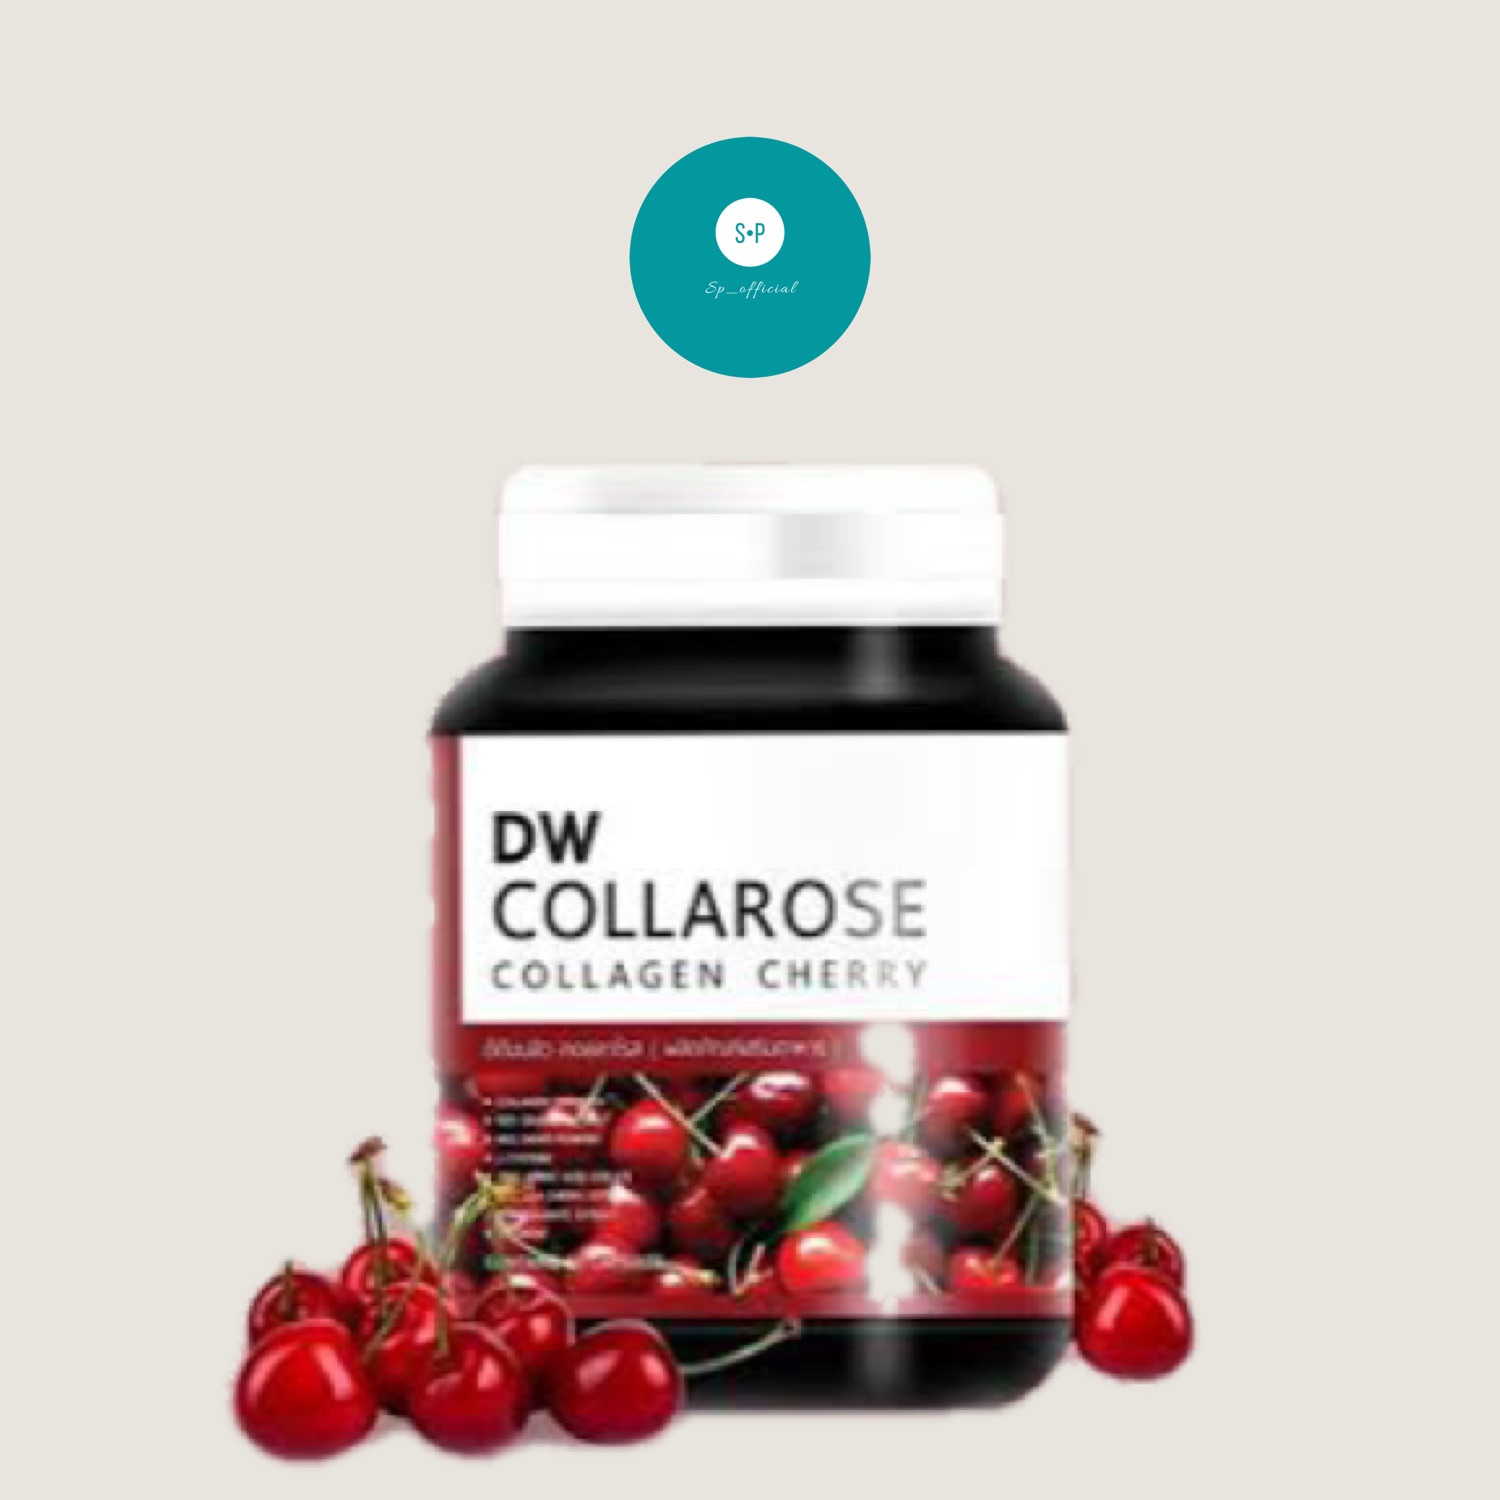 DW Collarose Collagen ดีดับบลิว คอลลาโรส คอลลาเจน บรรจุ 60 เม็ด อาหารเสริมบำรุงผิว